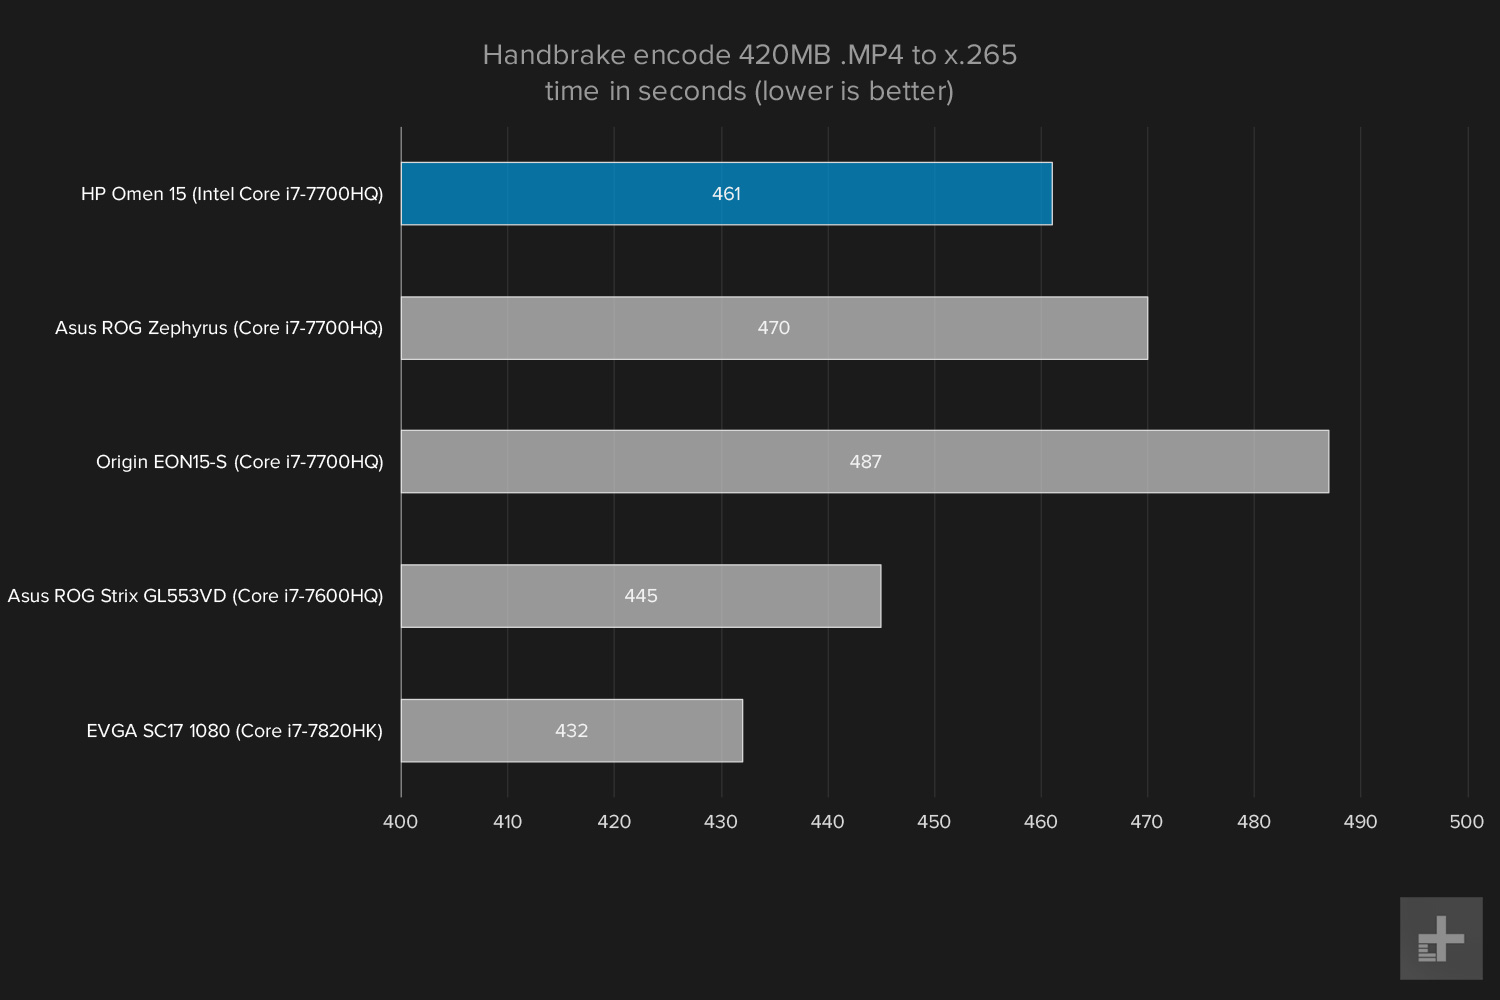 HP Omen benchmark graphs Handbrake Encode